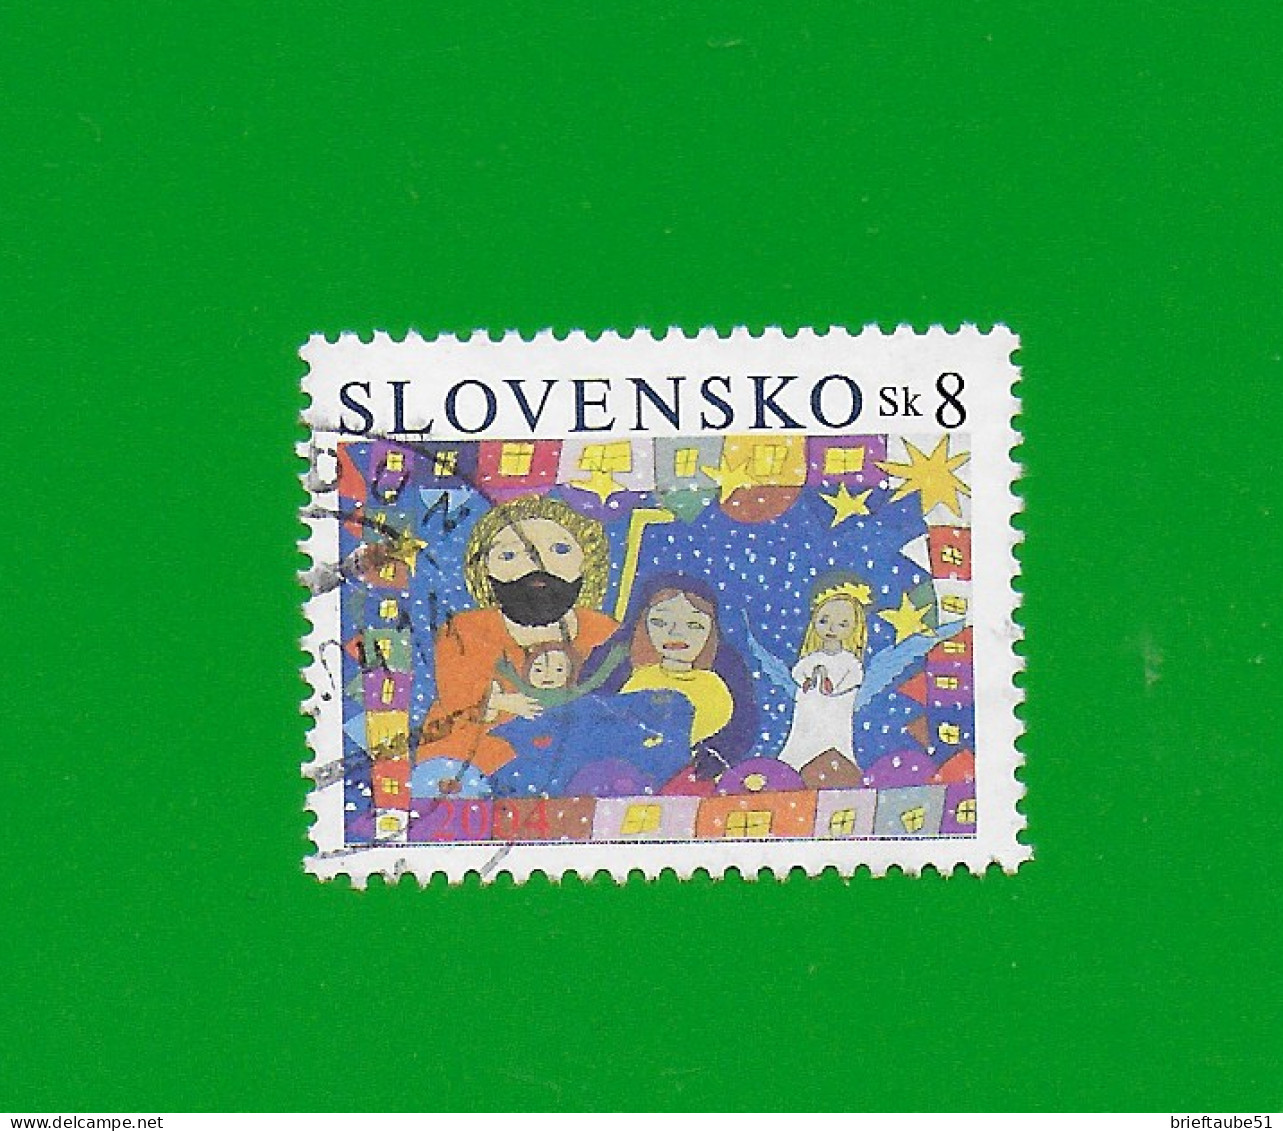 SLOVAKIA REPUBLIC 2004 Gestempelt°Used/Bedarf  MiNr. 496 "WEIHNACHTEN  #  HEILIGE FAMILIE" - Used Stamps